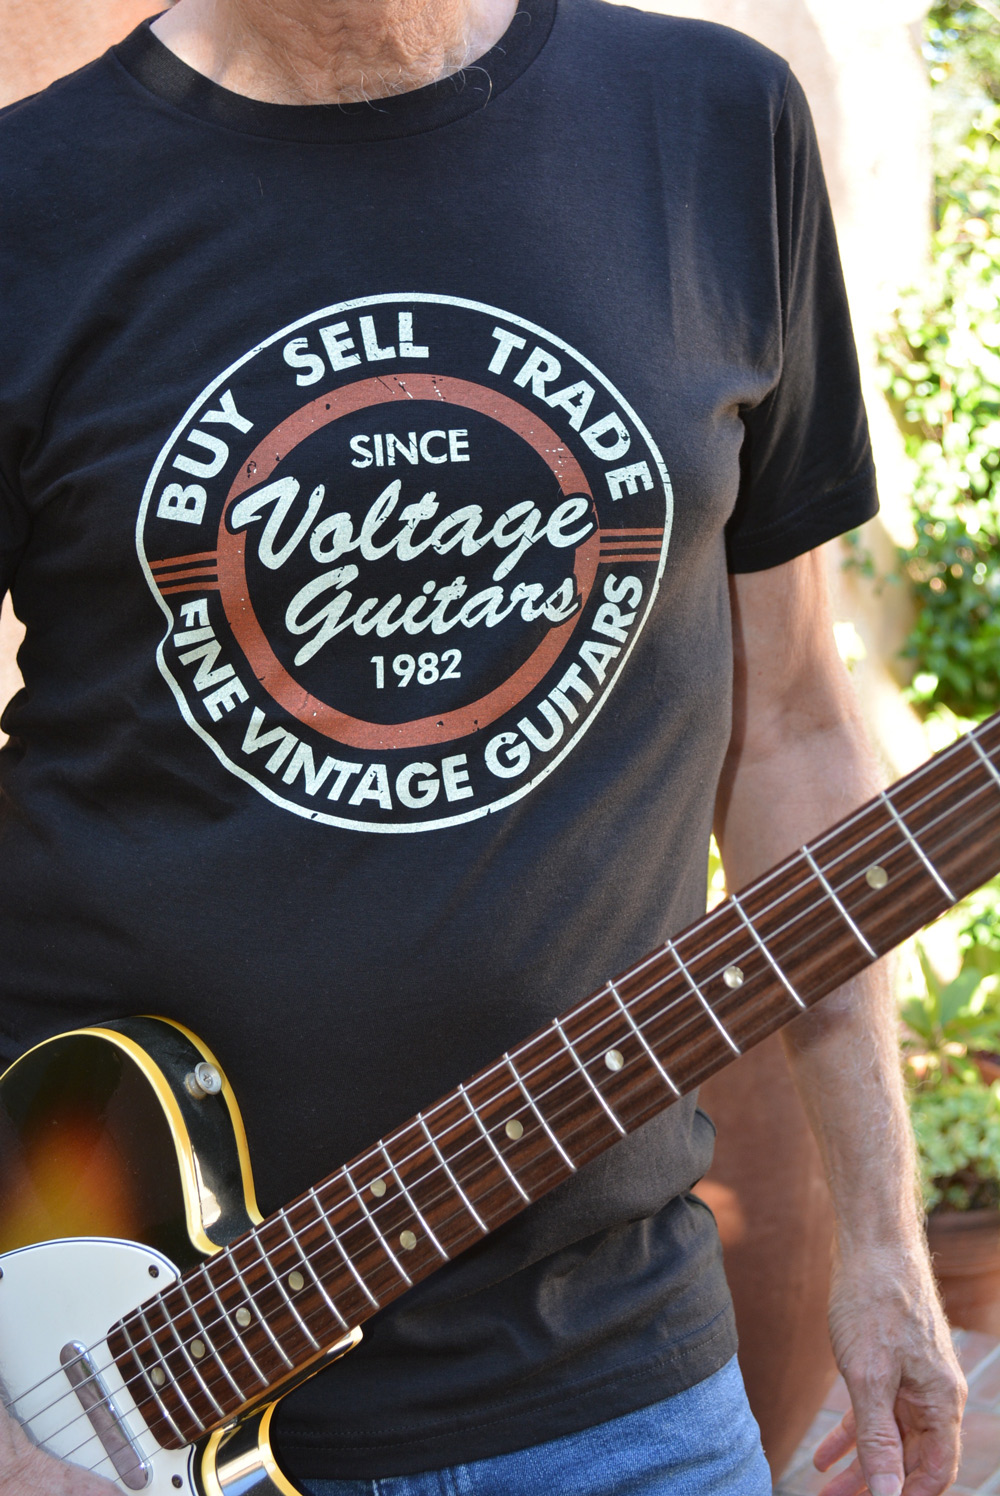 Voltage Guitar T-Shirts